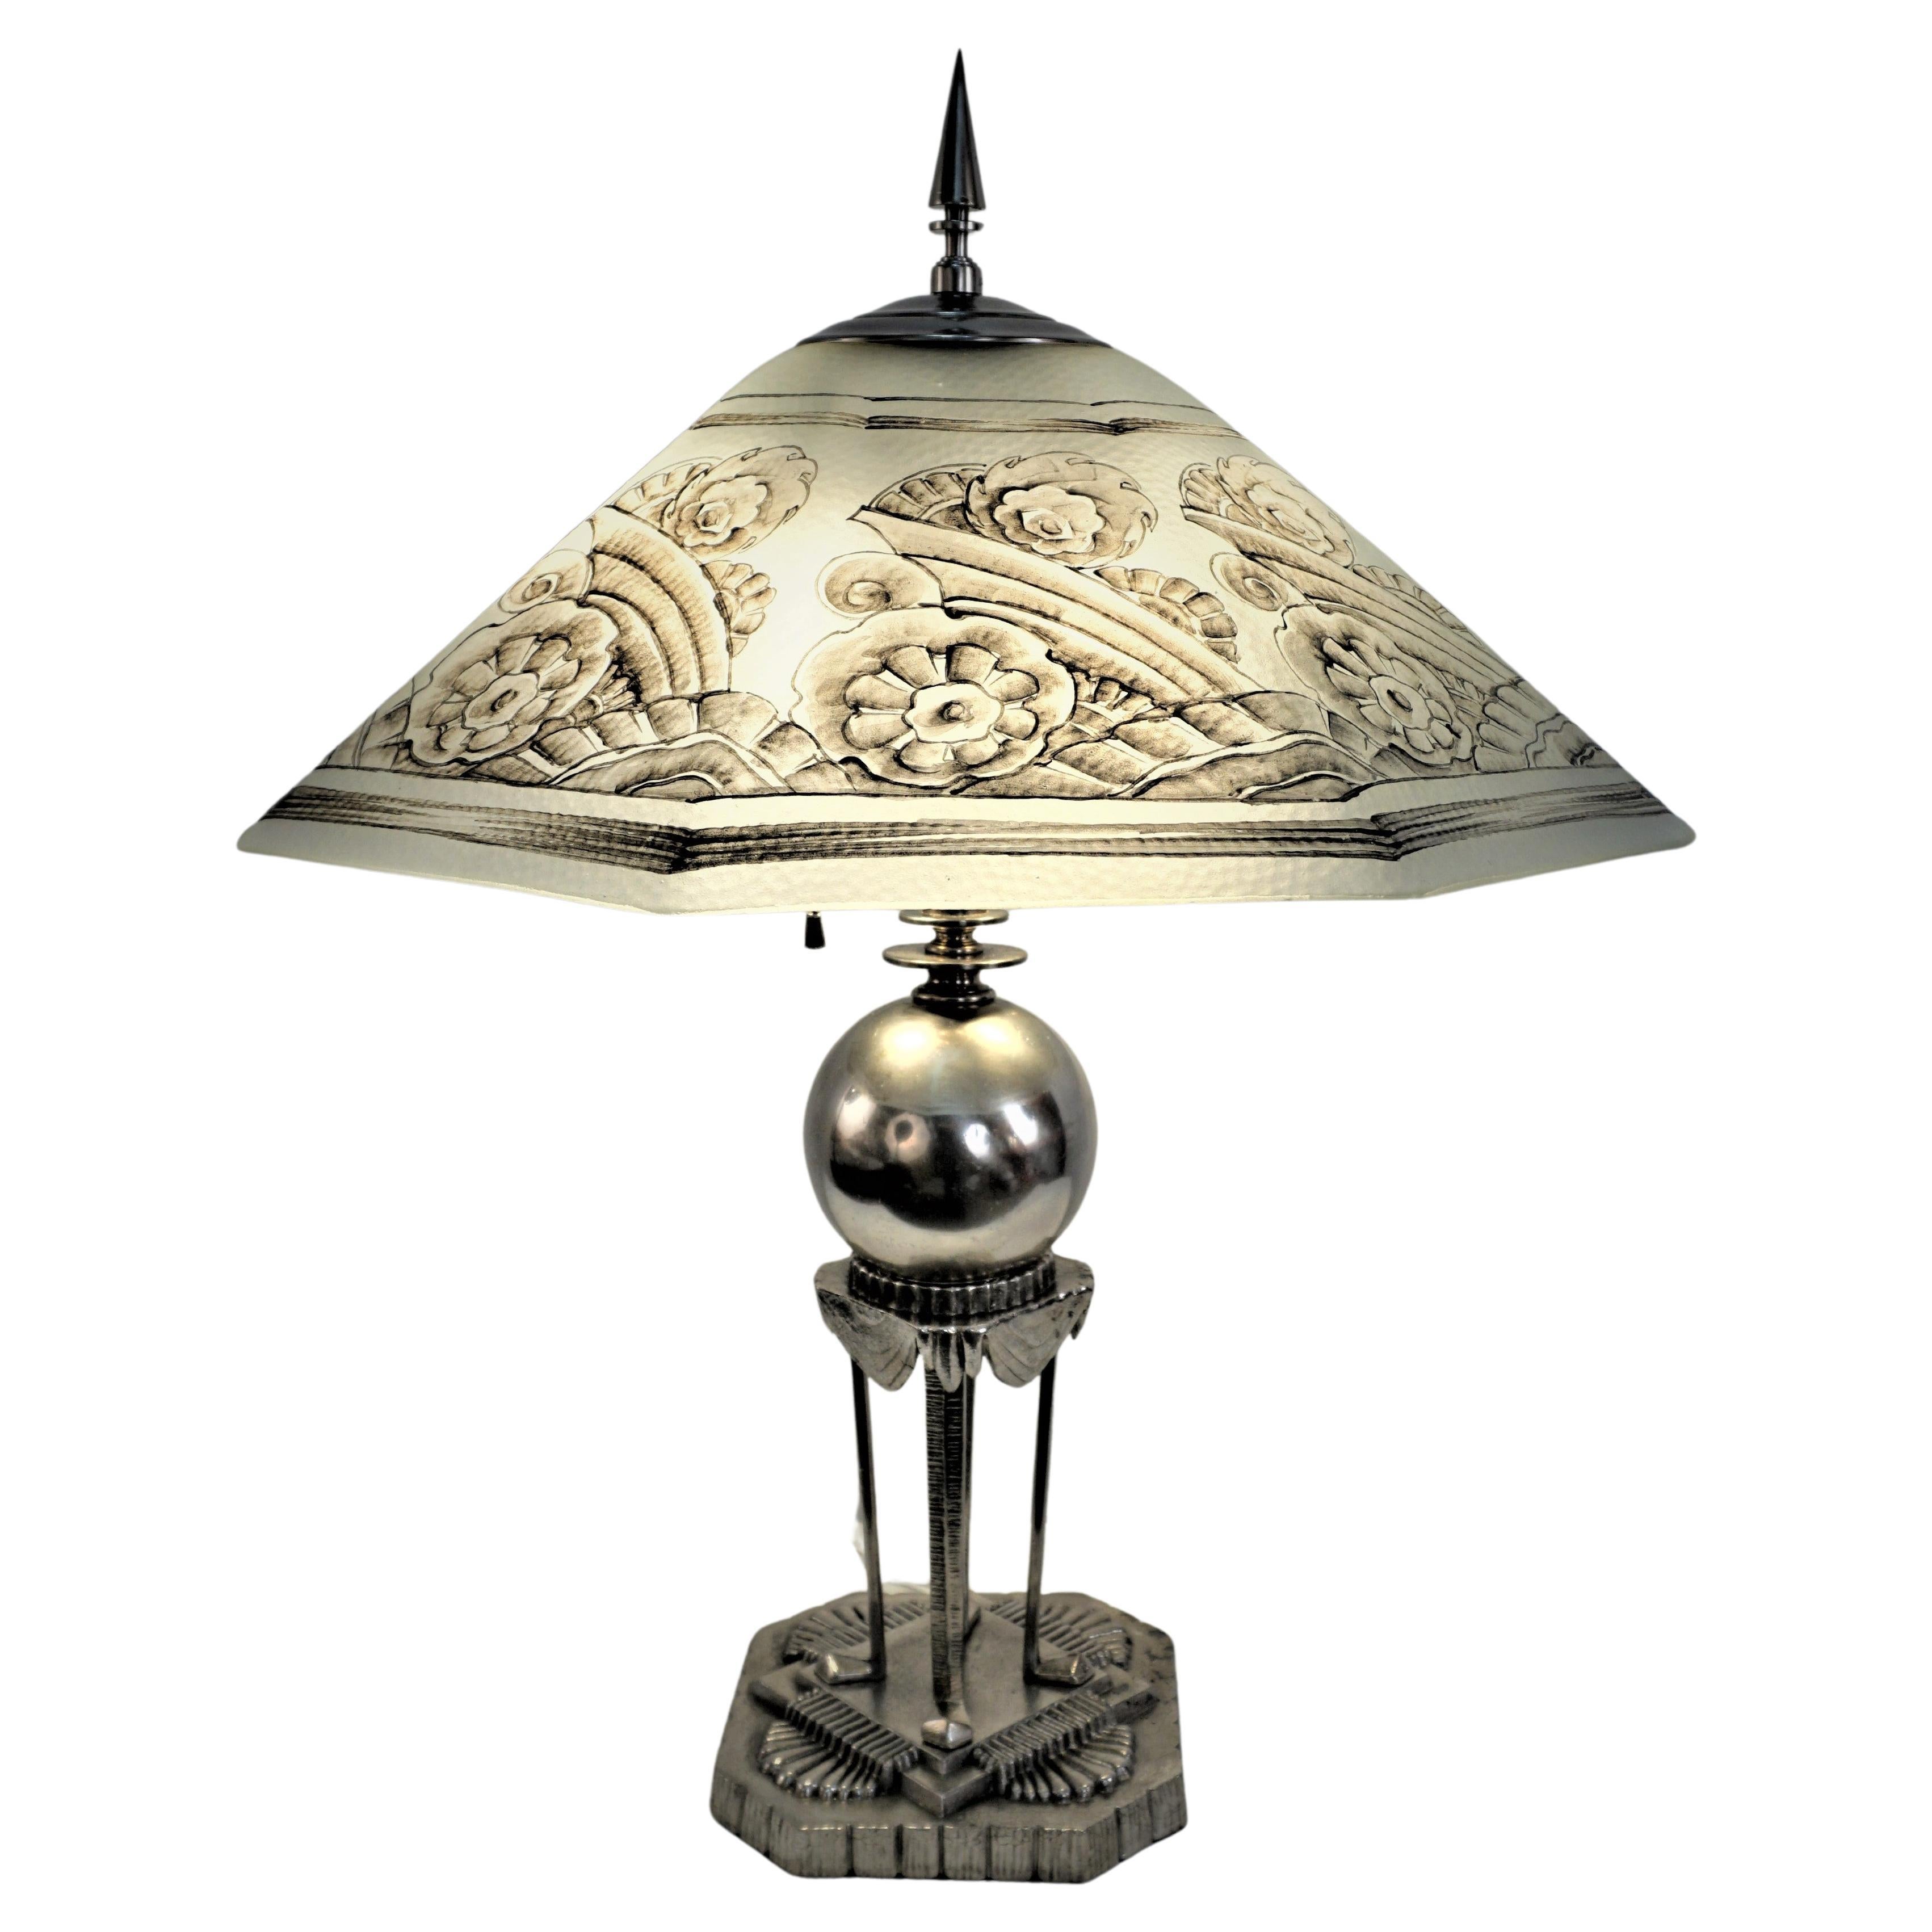 L'Autum 1930's Painted Glass Art Deco Table Lamp For Sale